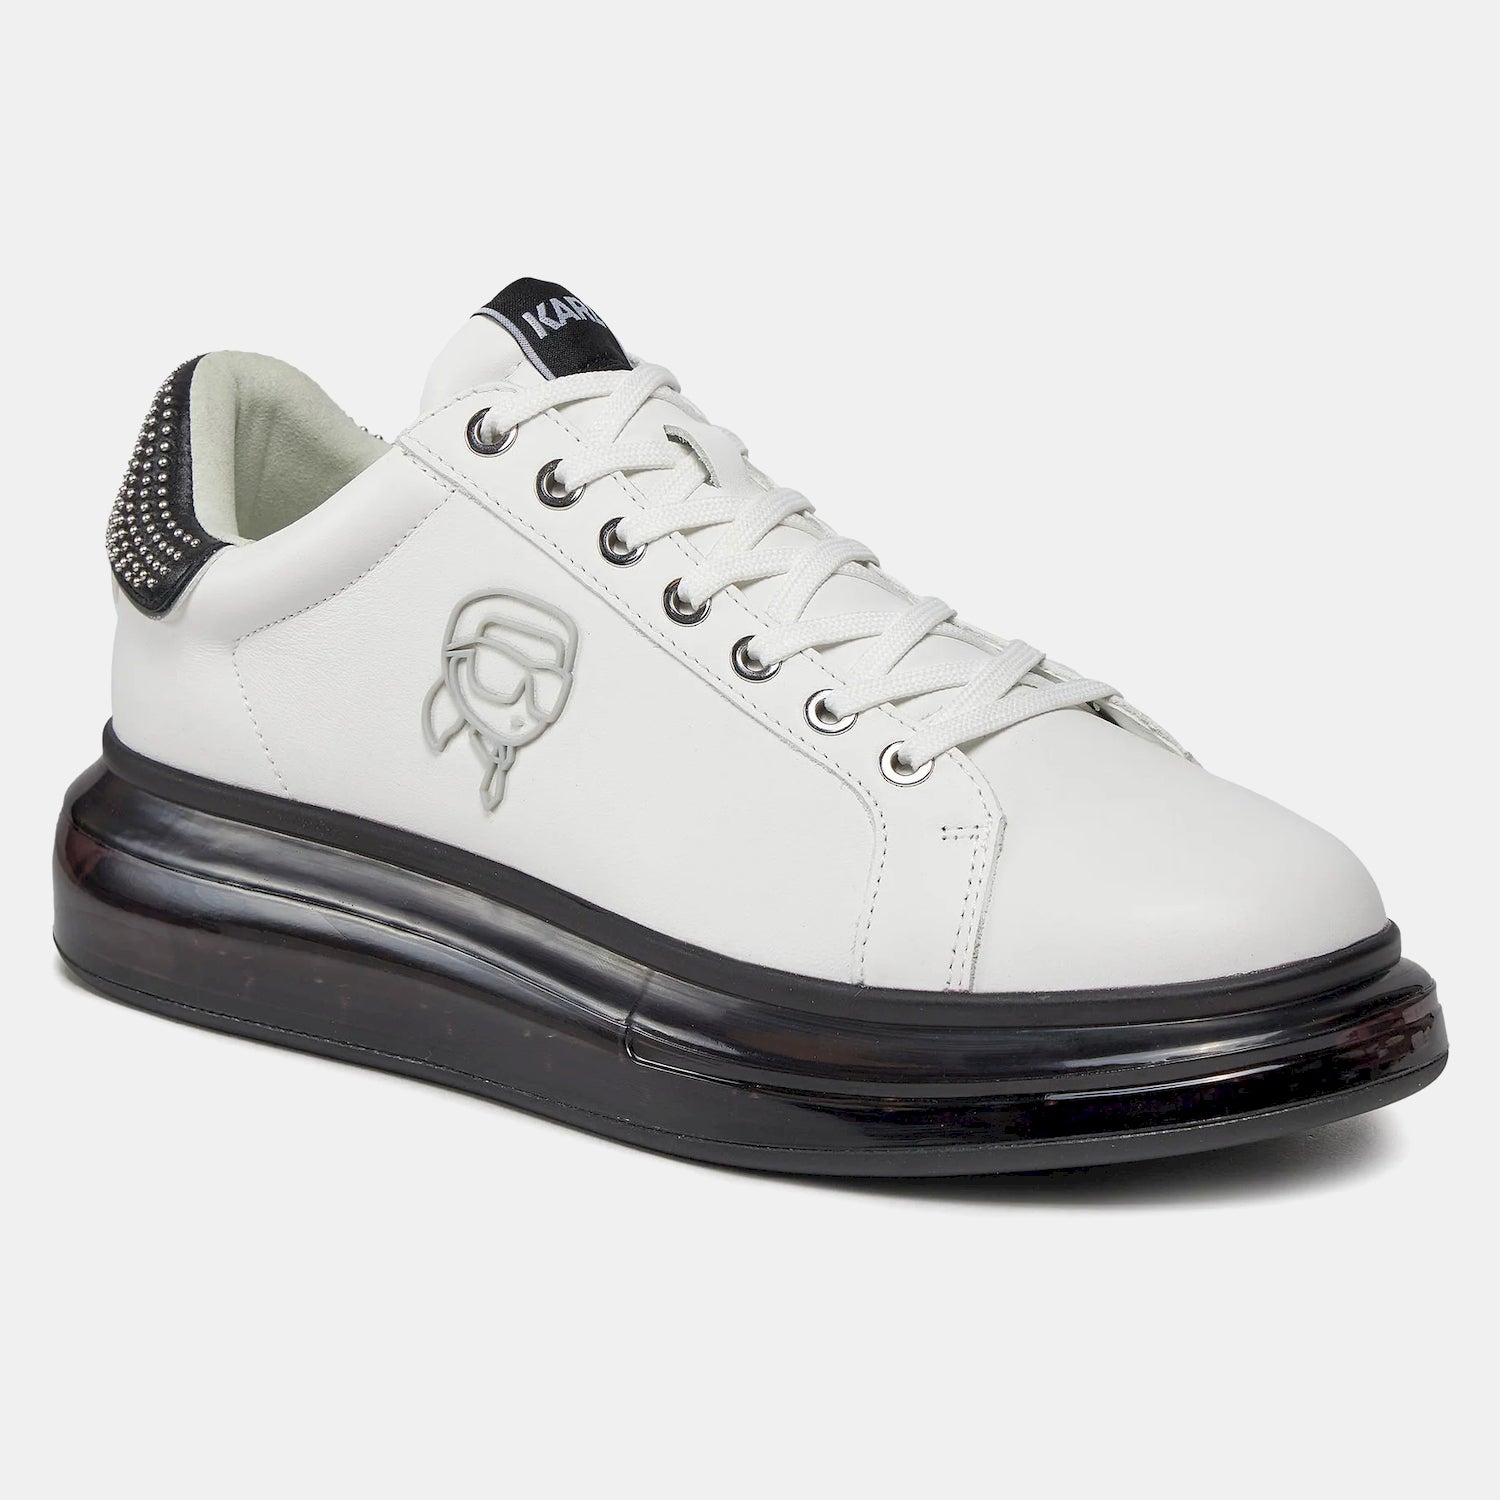 Karl Lagerfeld Sapatilhas Sneakers Shoes Kl52631n Whi Black Branco Preto_shot6